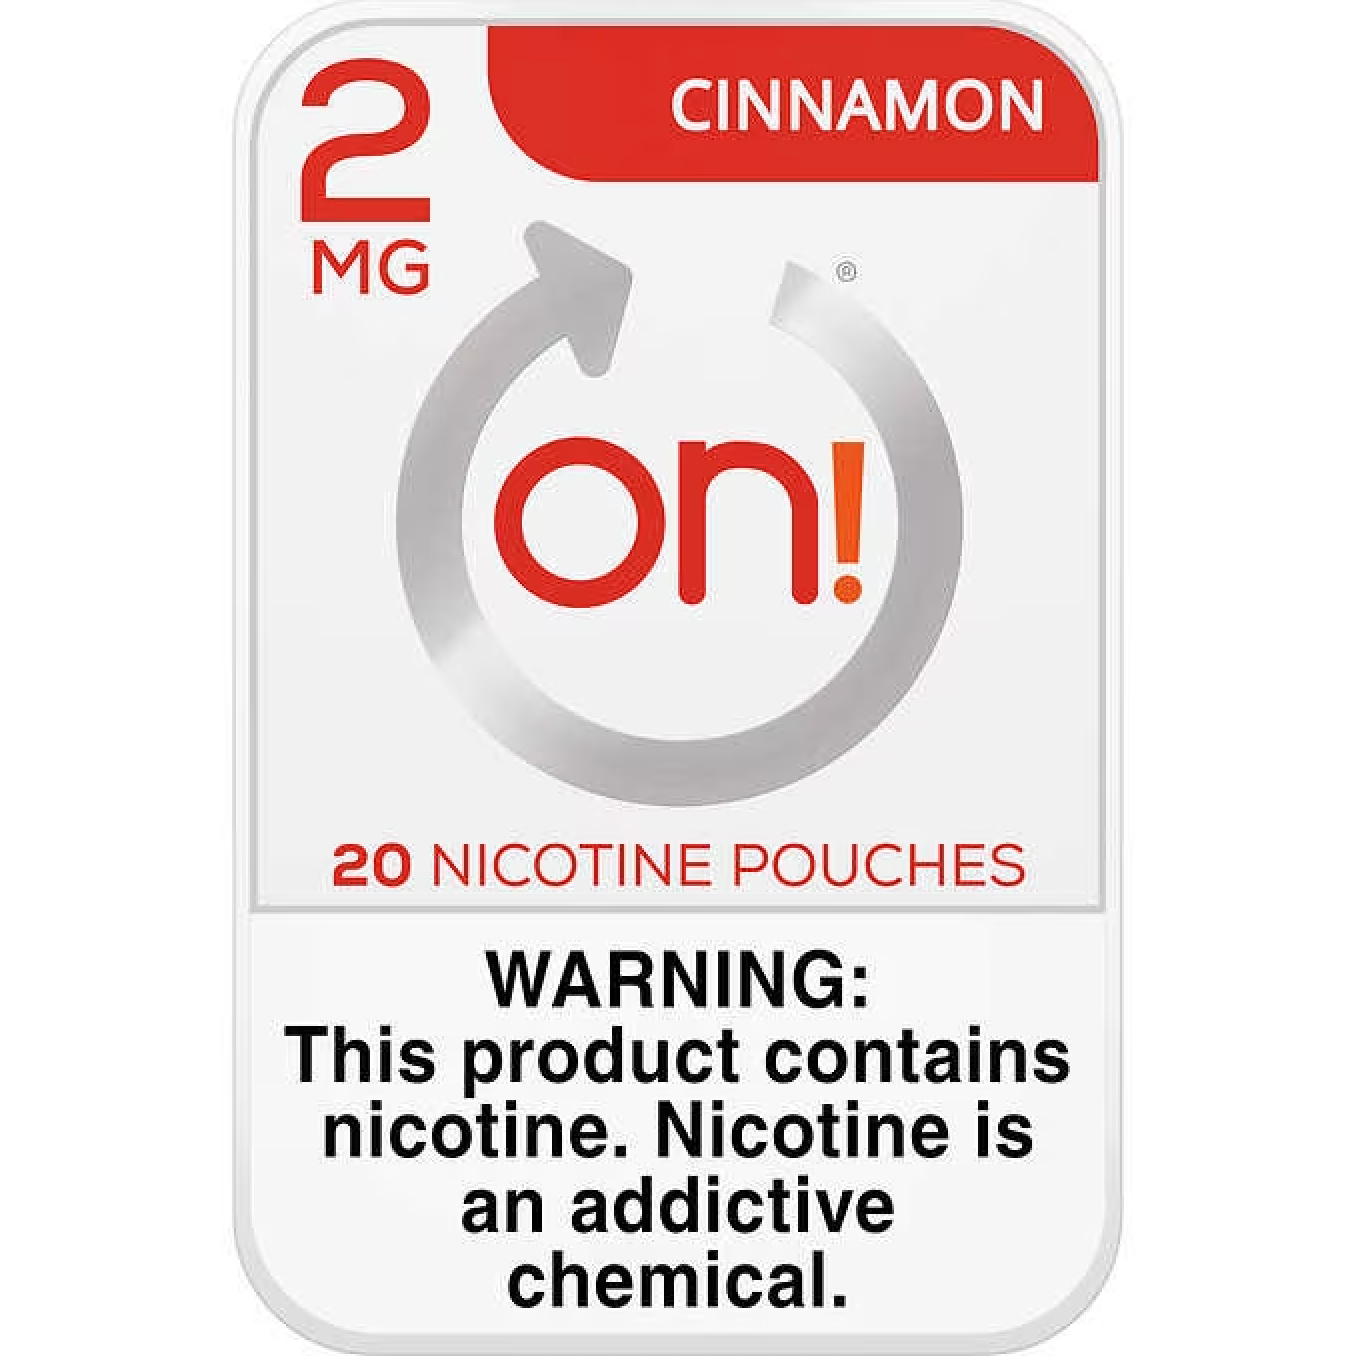 ON! Nicotine Pouches Cinnamon